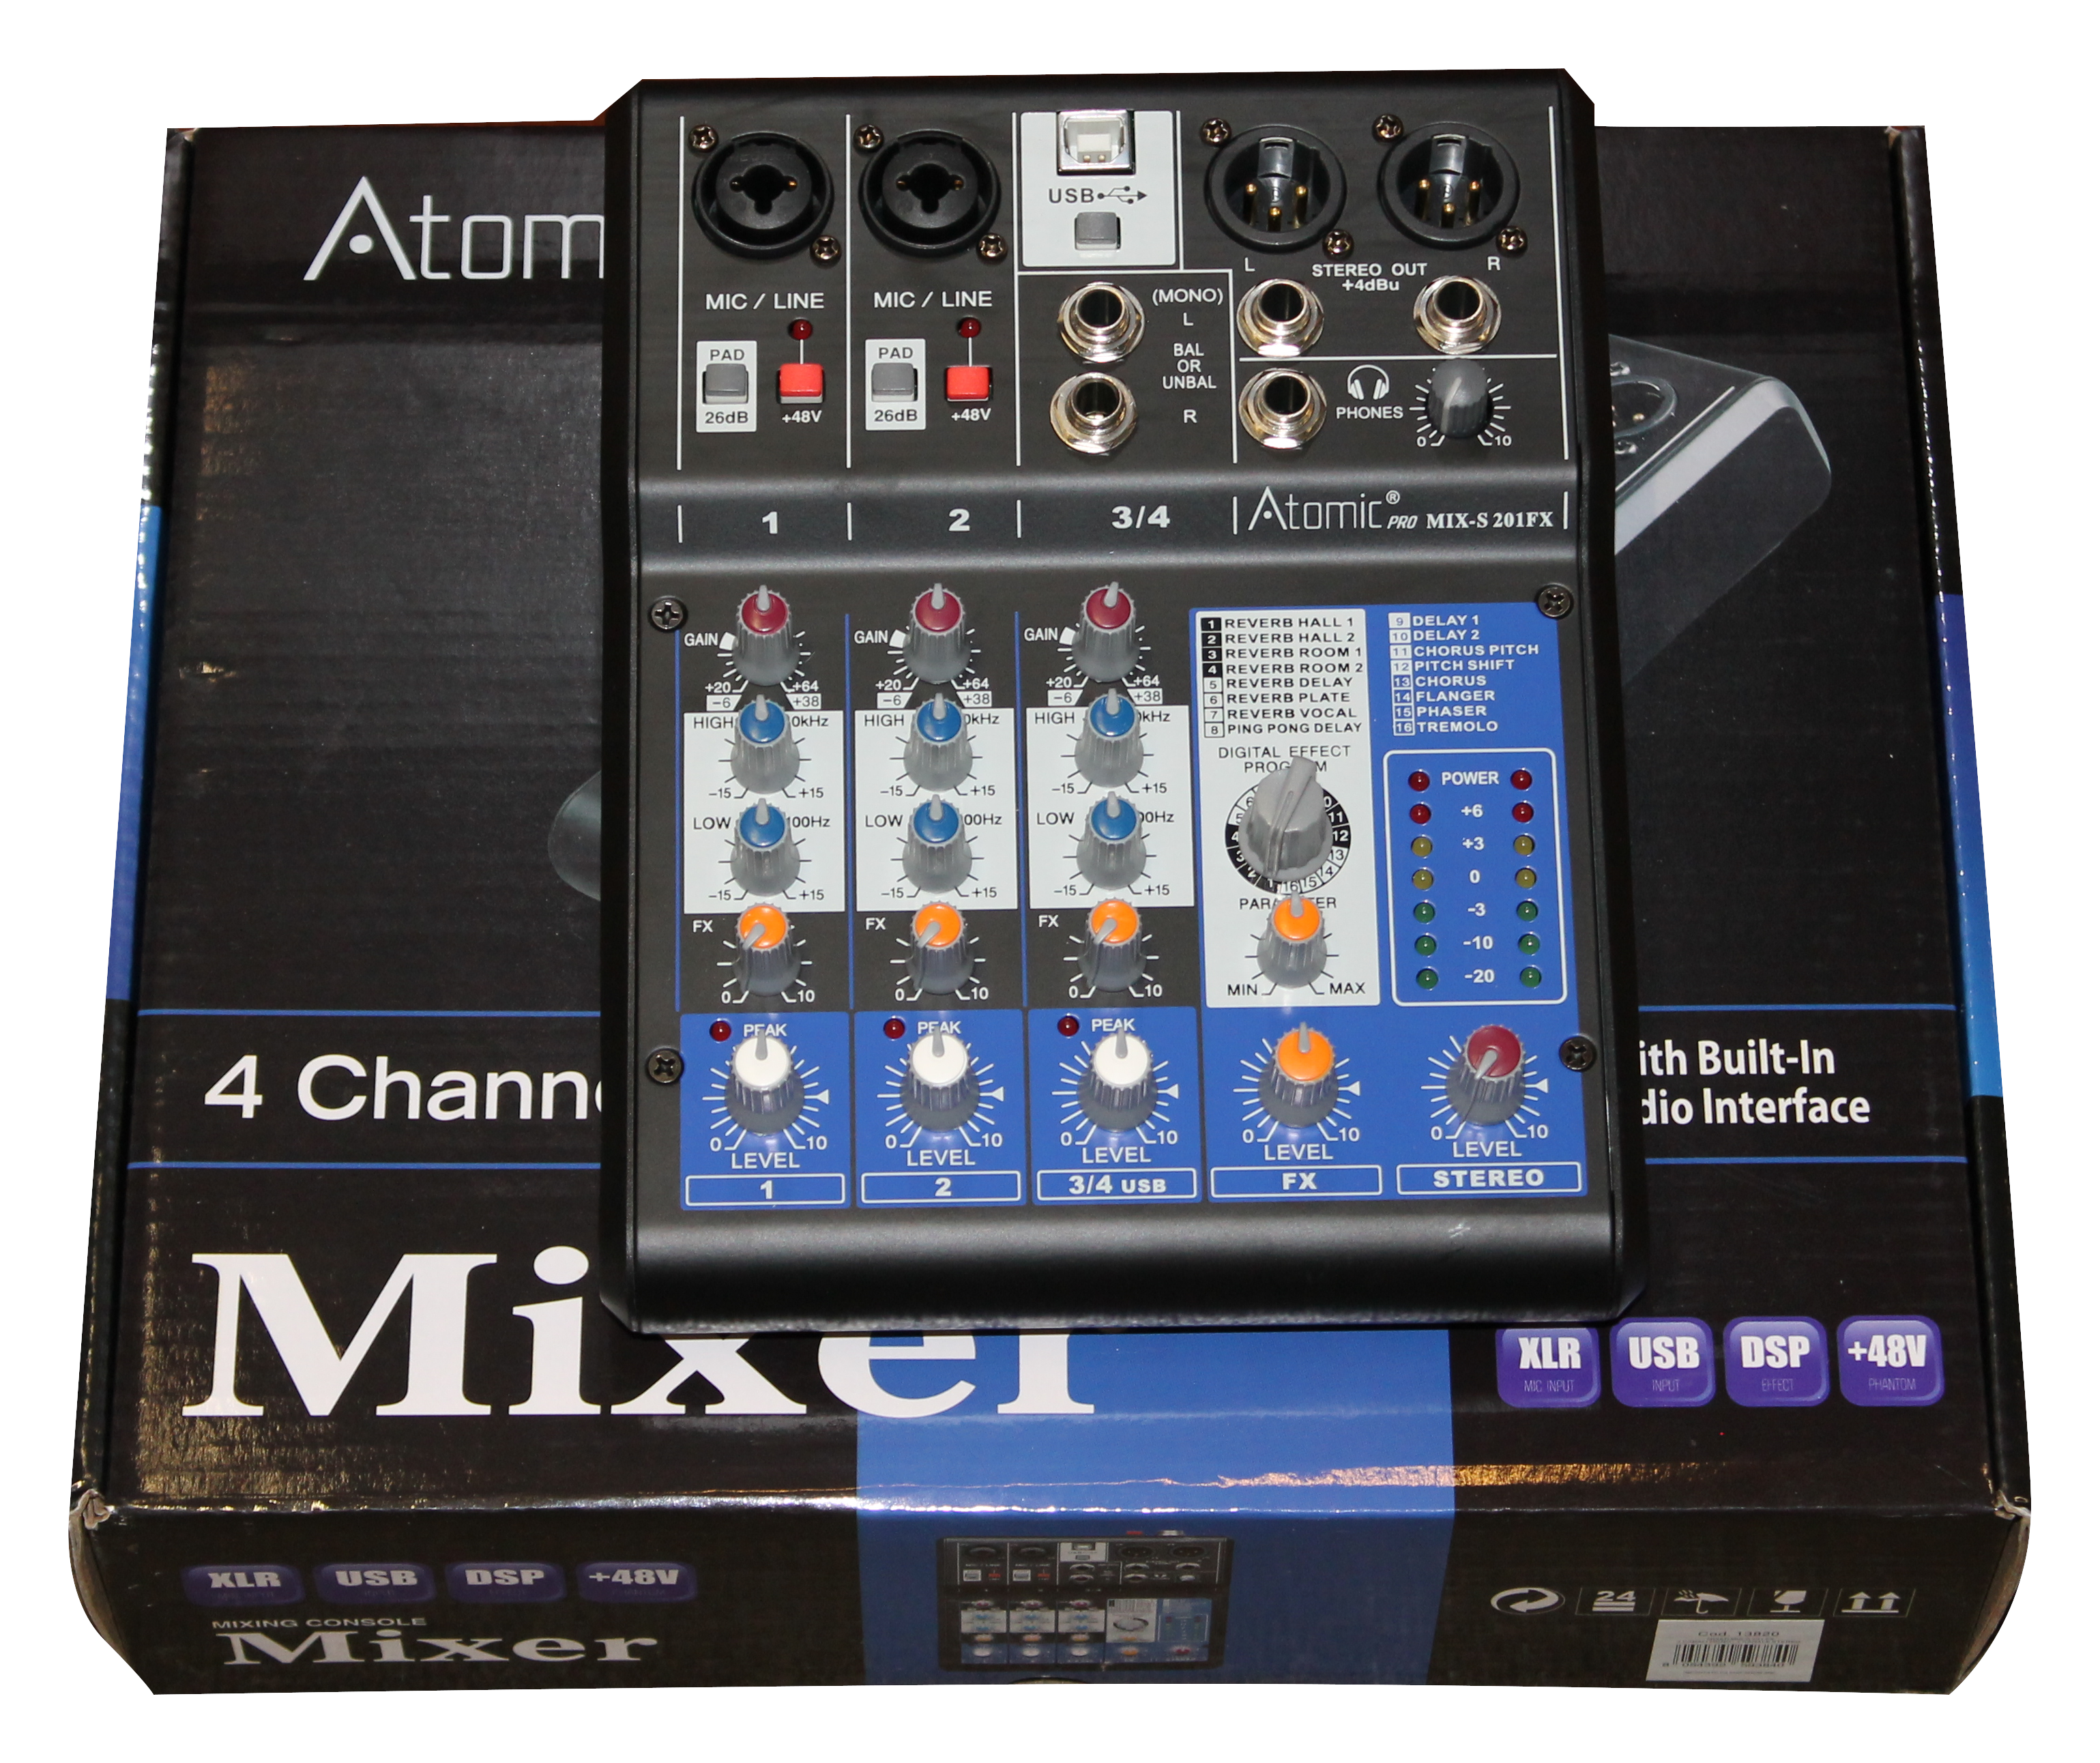 Atomic Pro Mix-S 201 fx